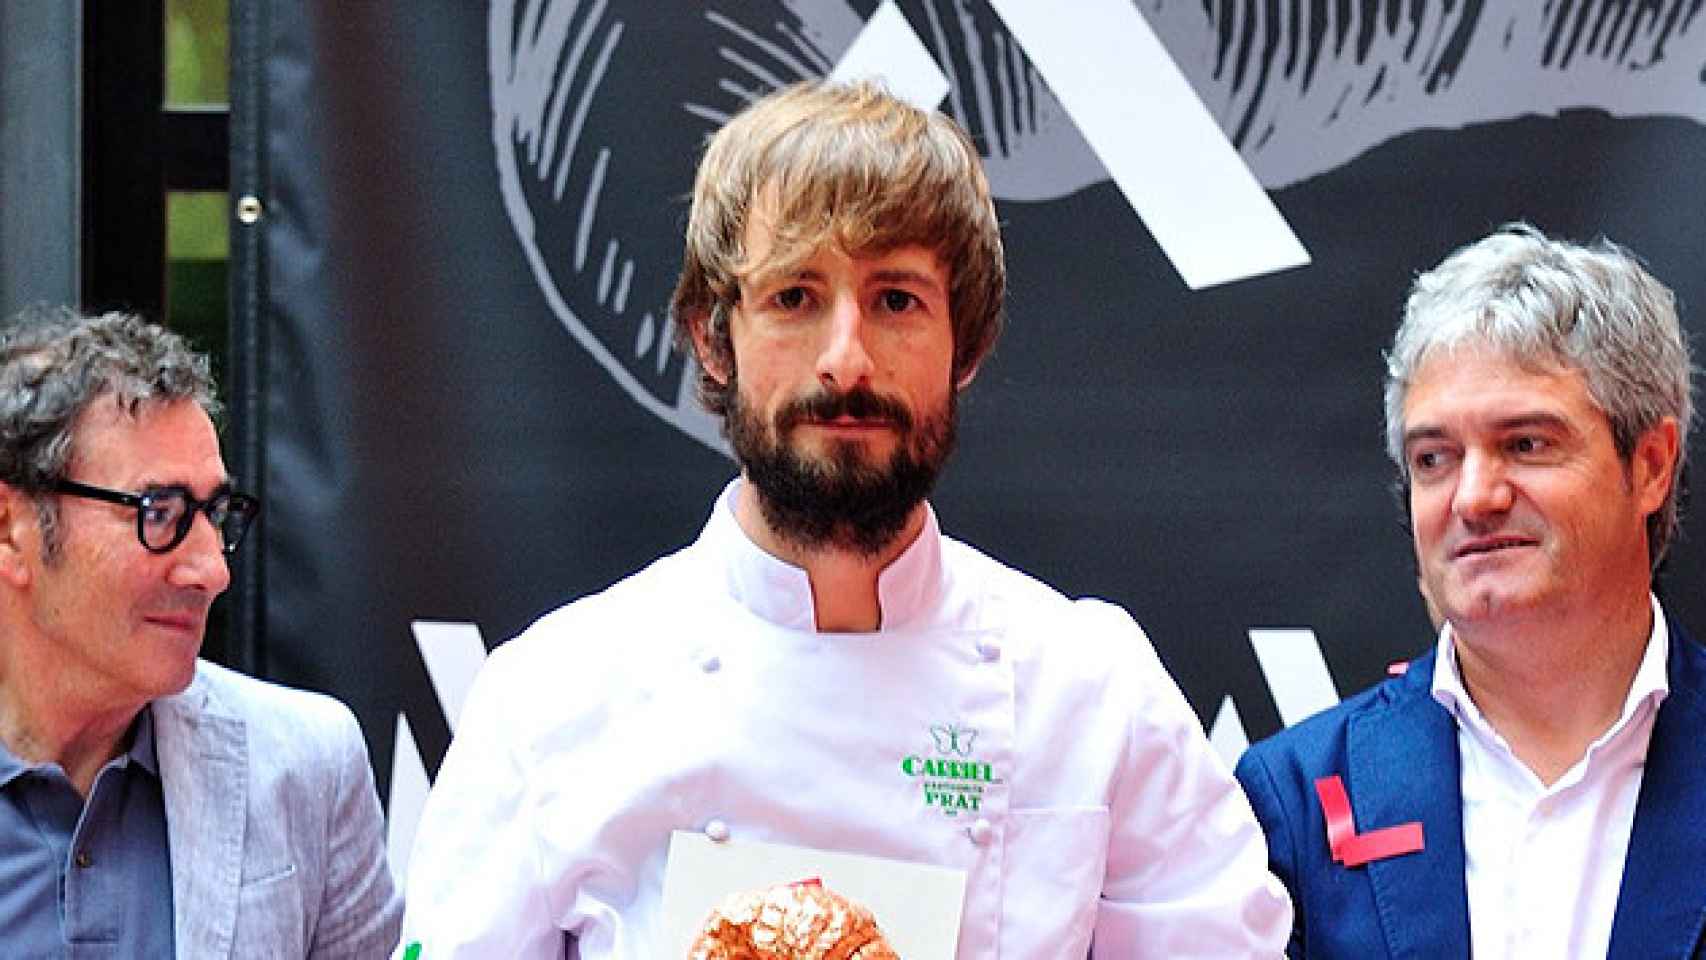 Gil Prat, ganador del mejor croissant artesano / TWITTER